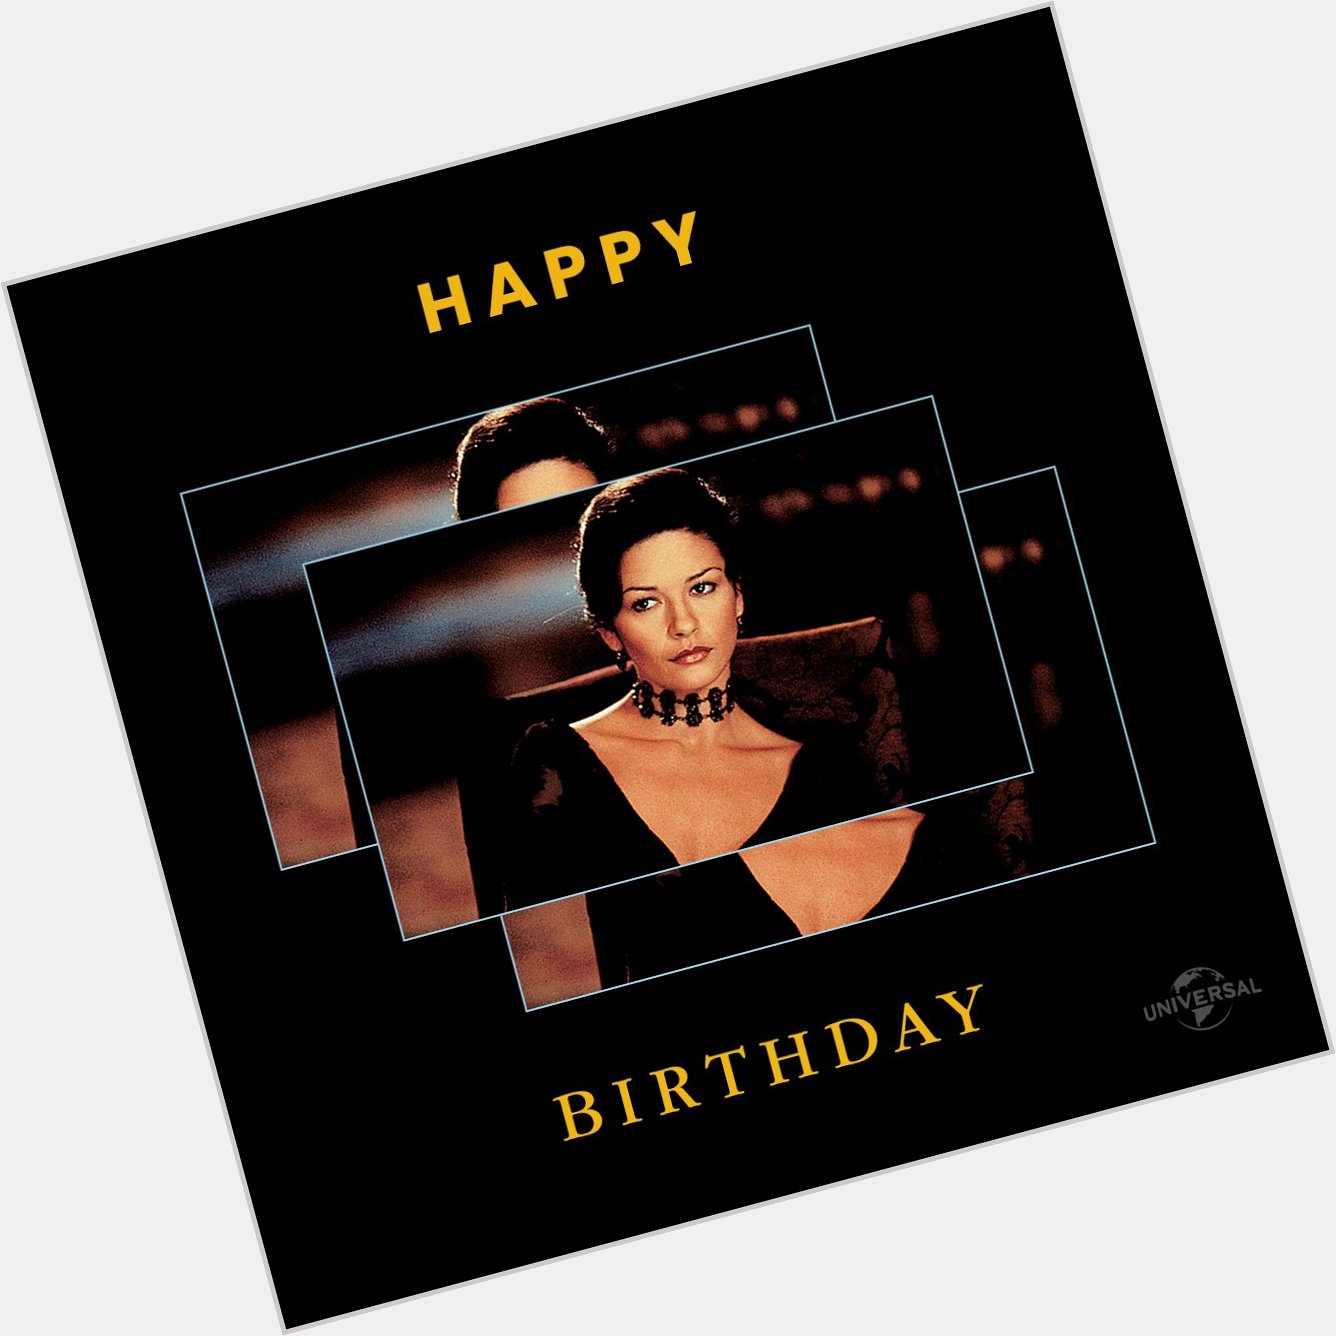 Wishing an eerily good time to Catherine Zeta-Jones today. Happy birthday to star! 